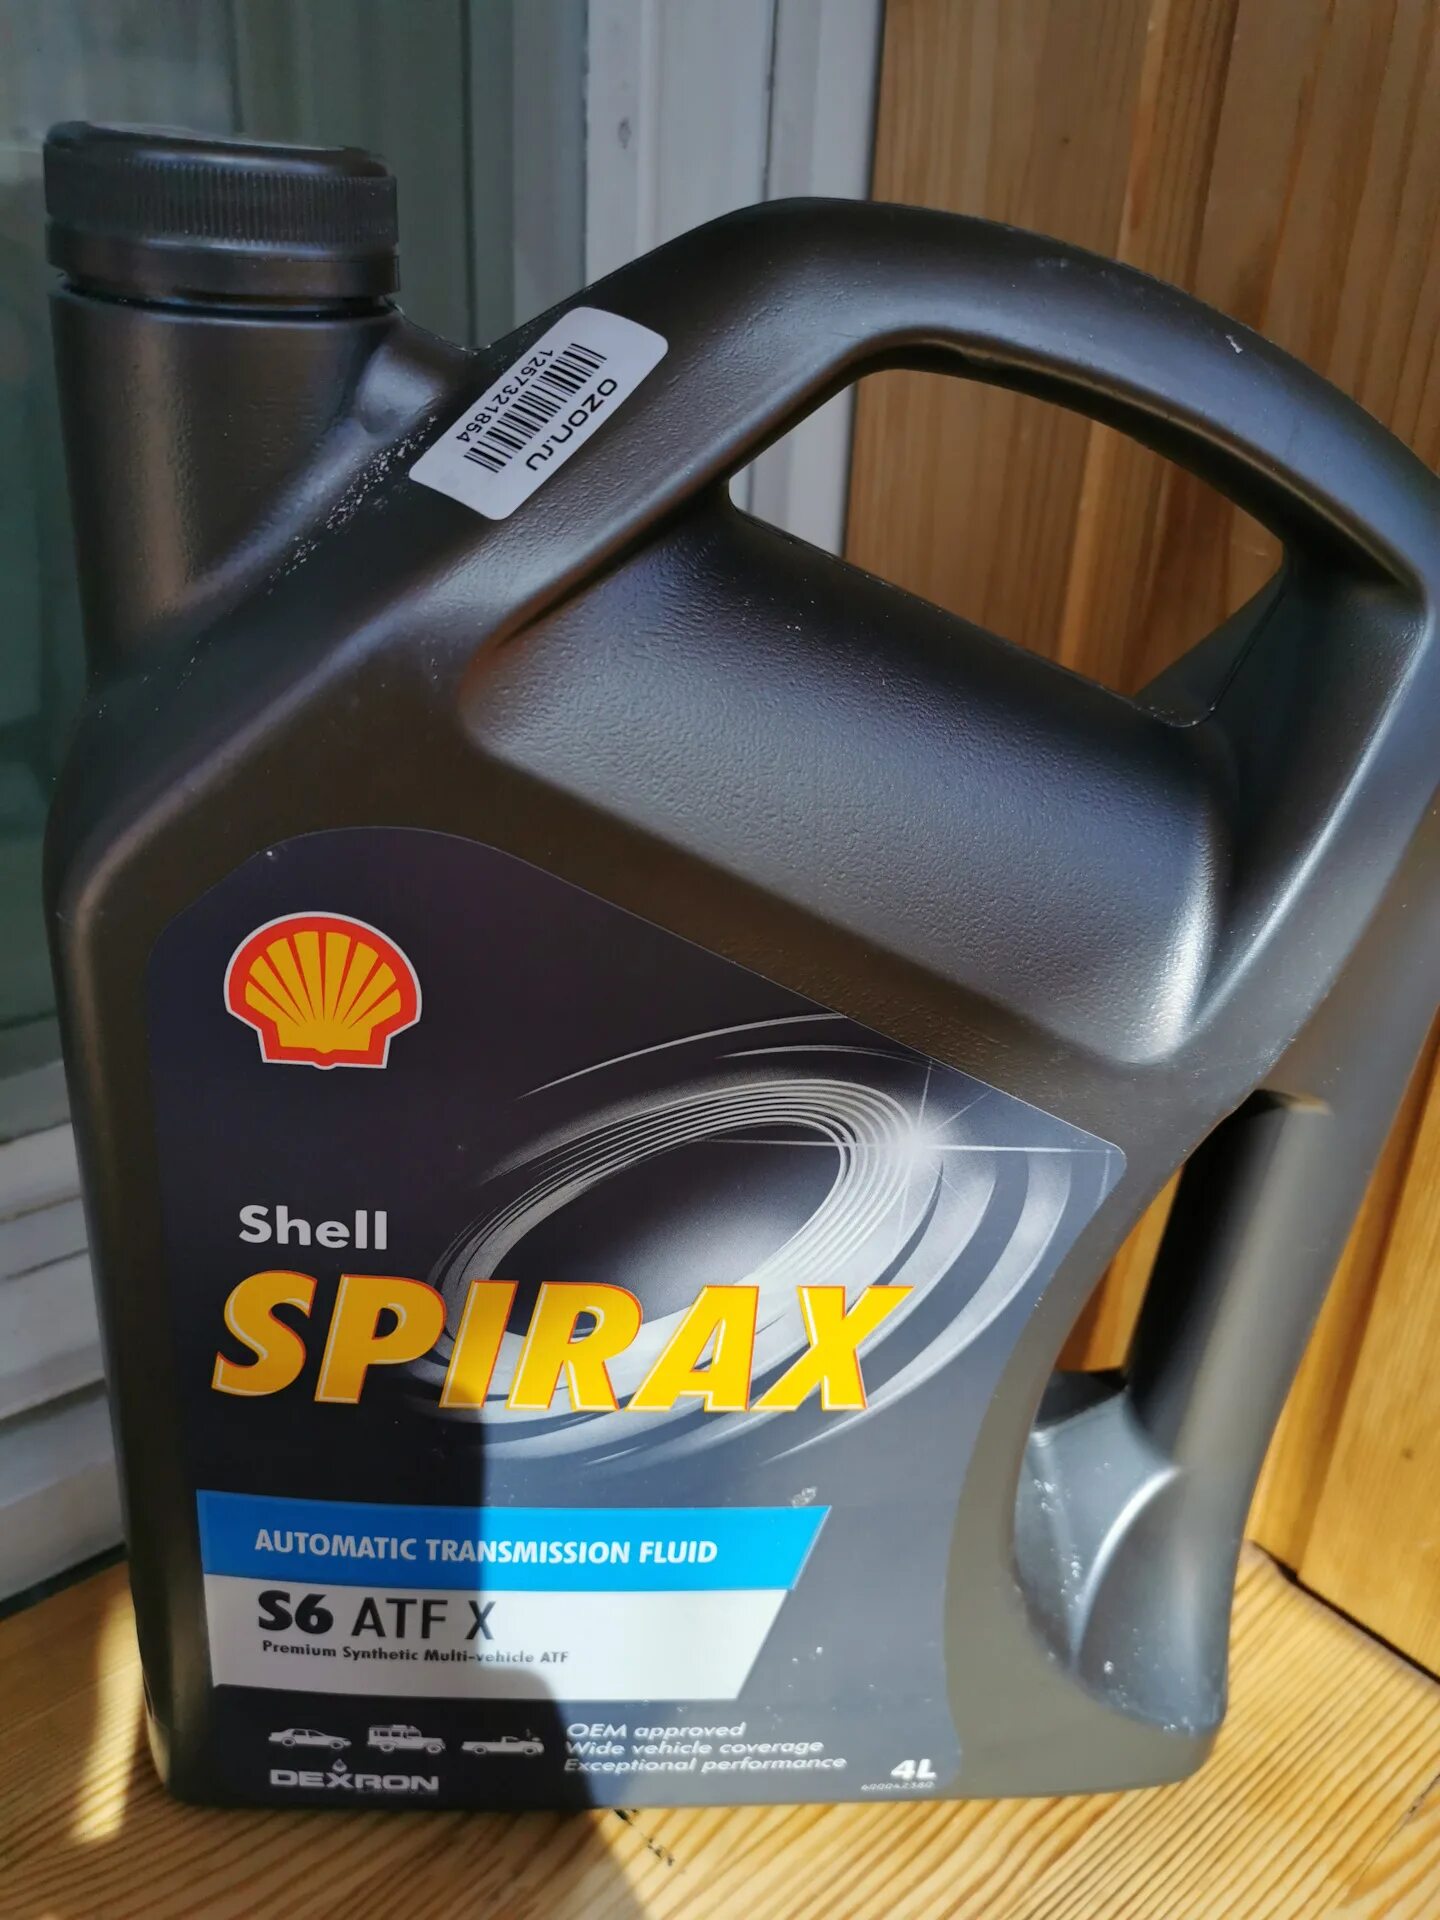 Shell atf x. Shell Spirax s6 ATF X. Shell Spirax s6 ATF X 4 допуски. Shell Spirax s6 ATF X 550046519 масло трансмиссионное Shell Spirax s6 ATF X 1 Л 550046519. АТФ s6 ZM Шелл.